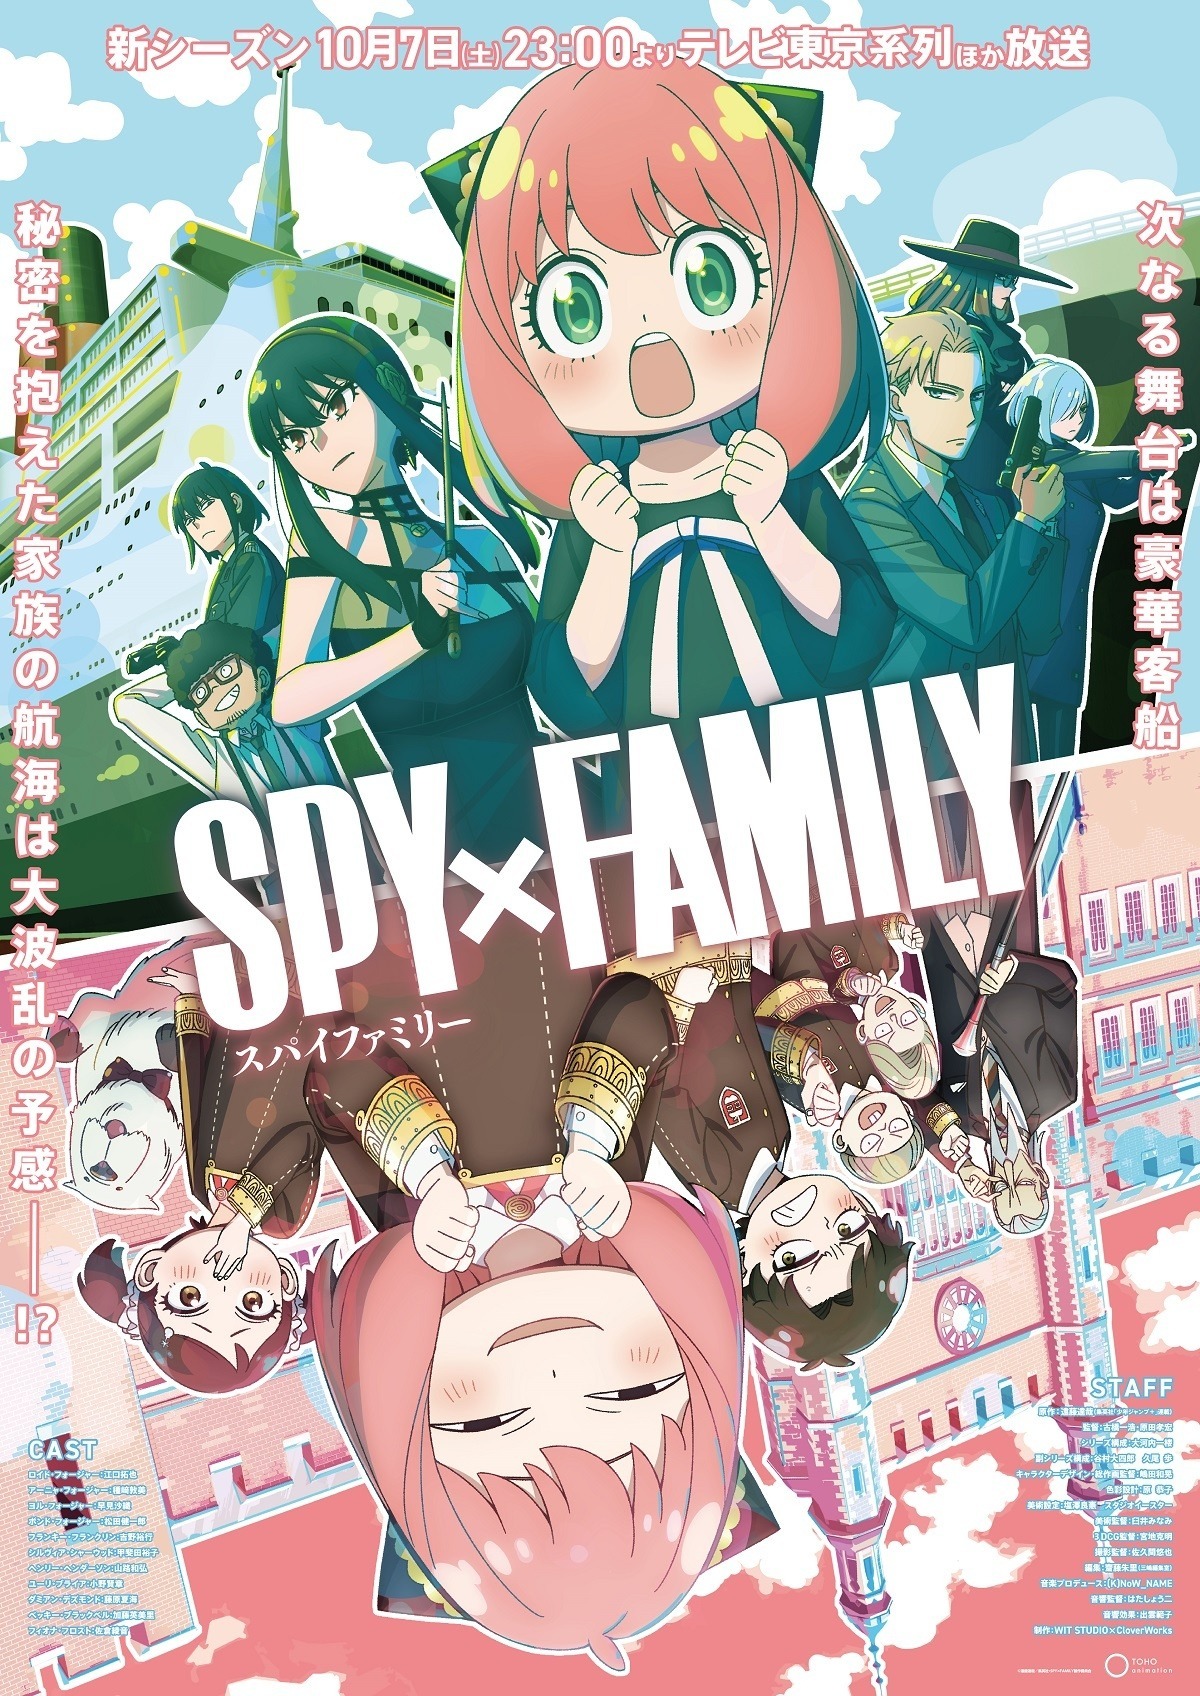 Spy x Family Season 2 Gets New Trailer, Previews Theme Songs by